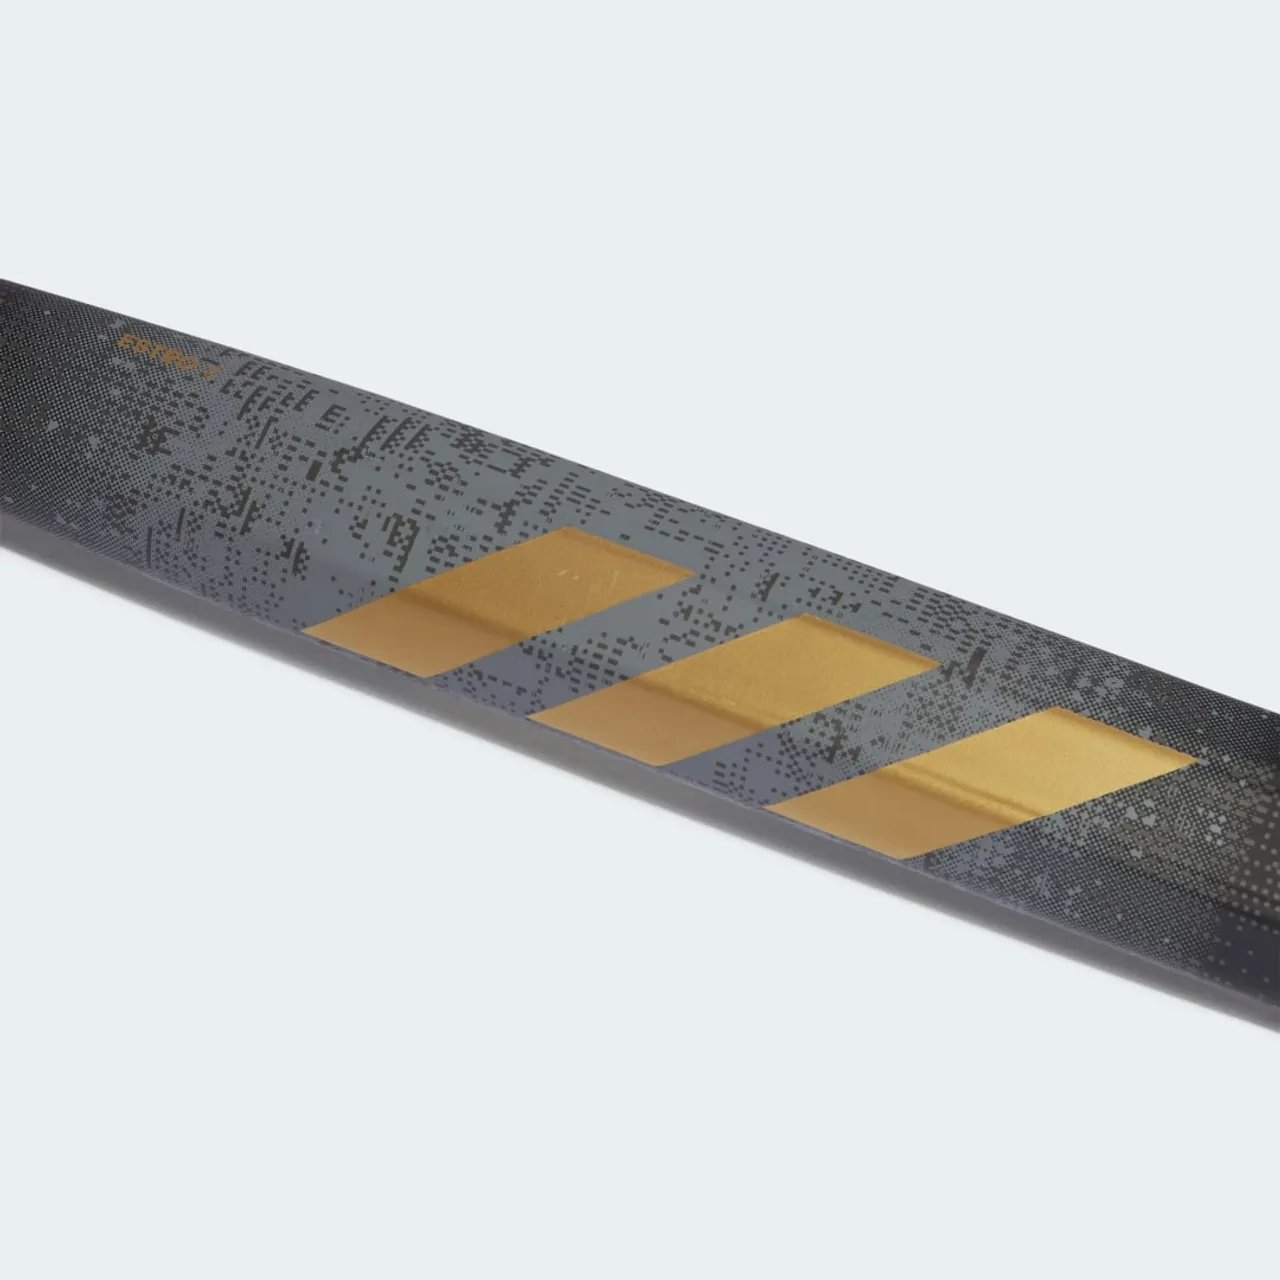 Estro 81 cm Field Hockey Stick